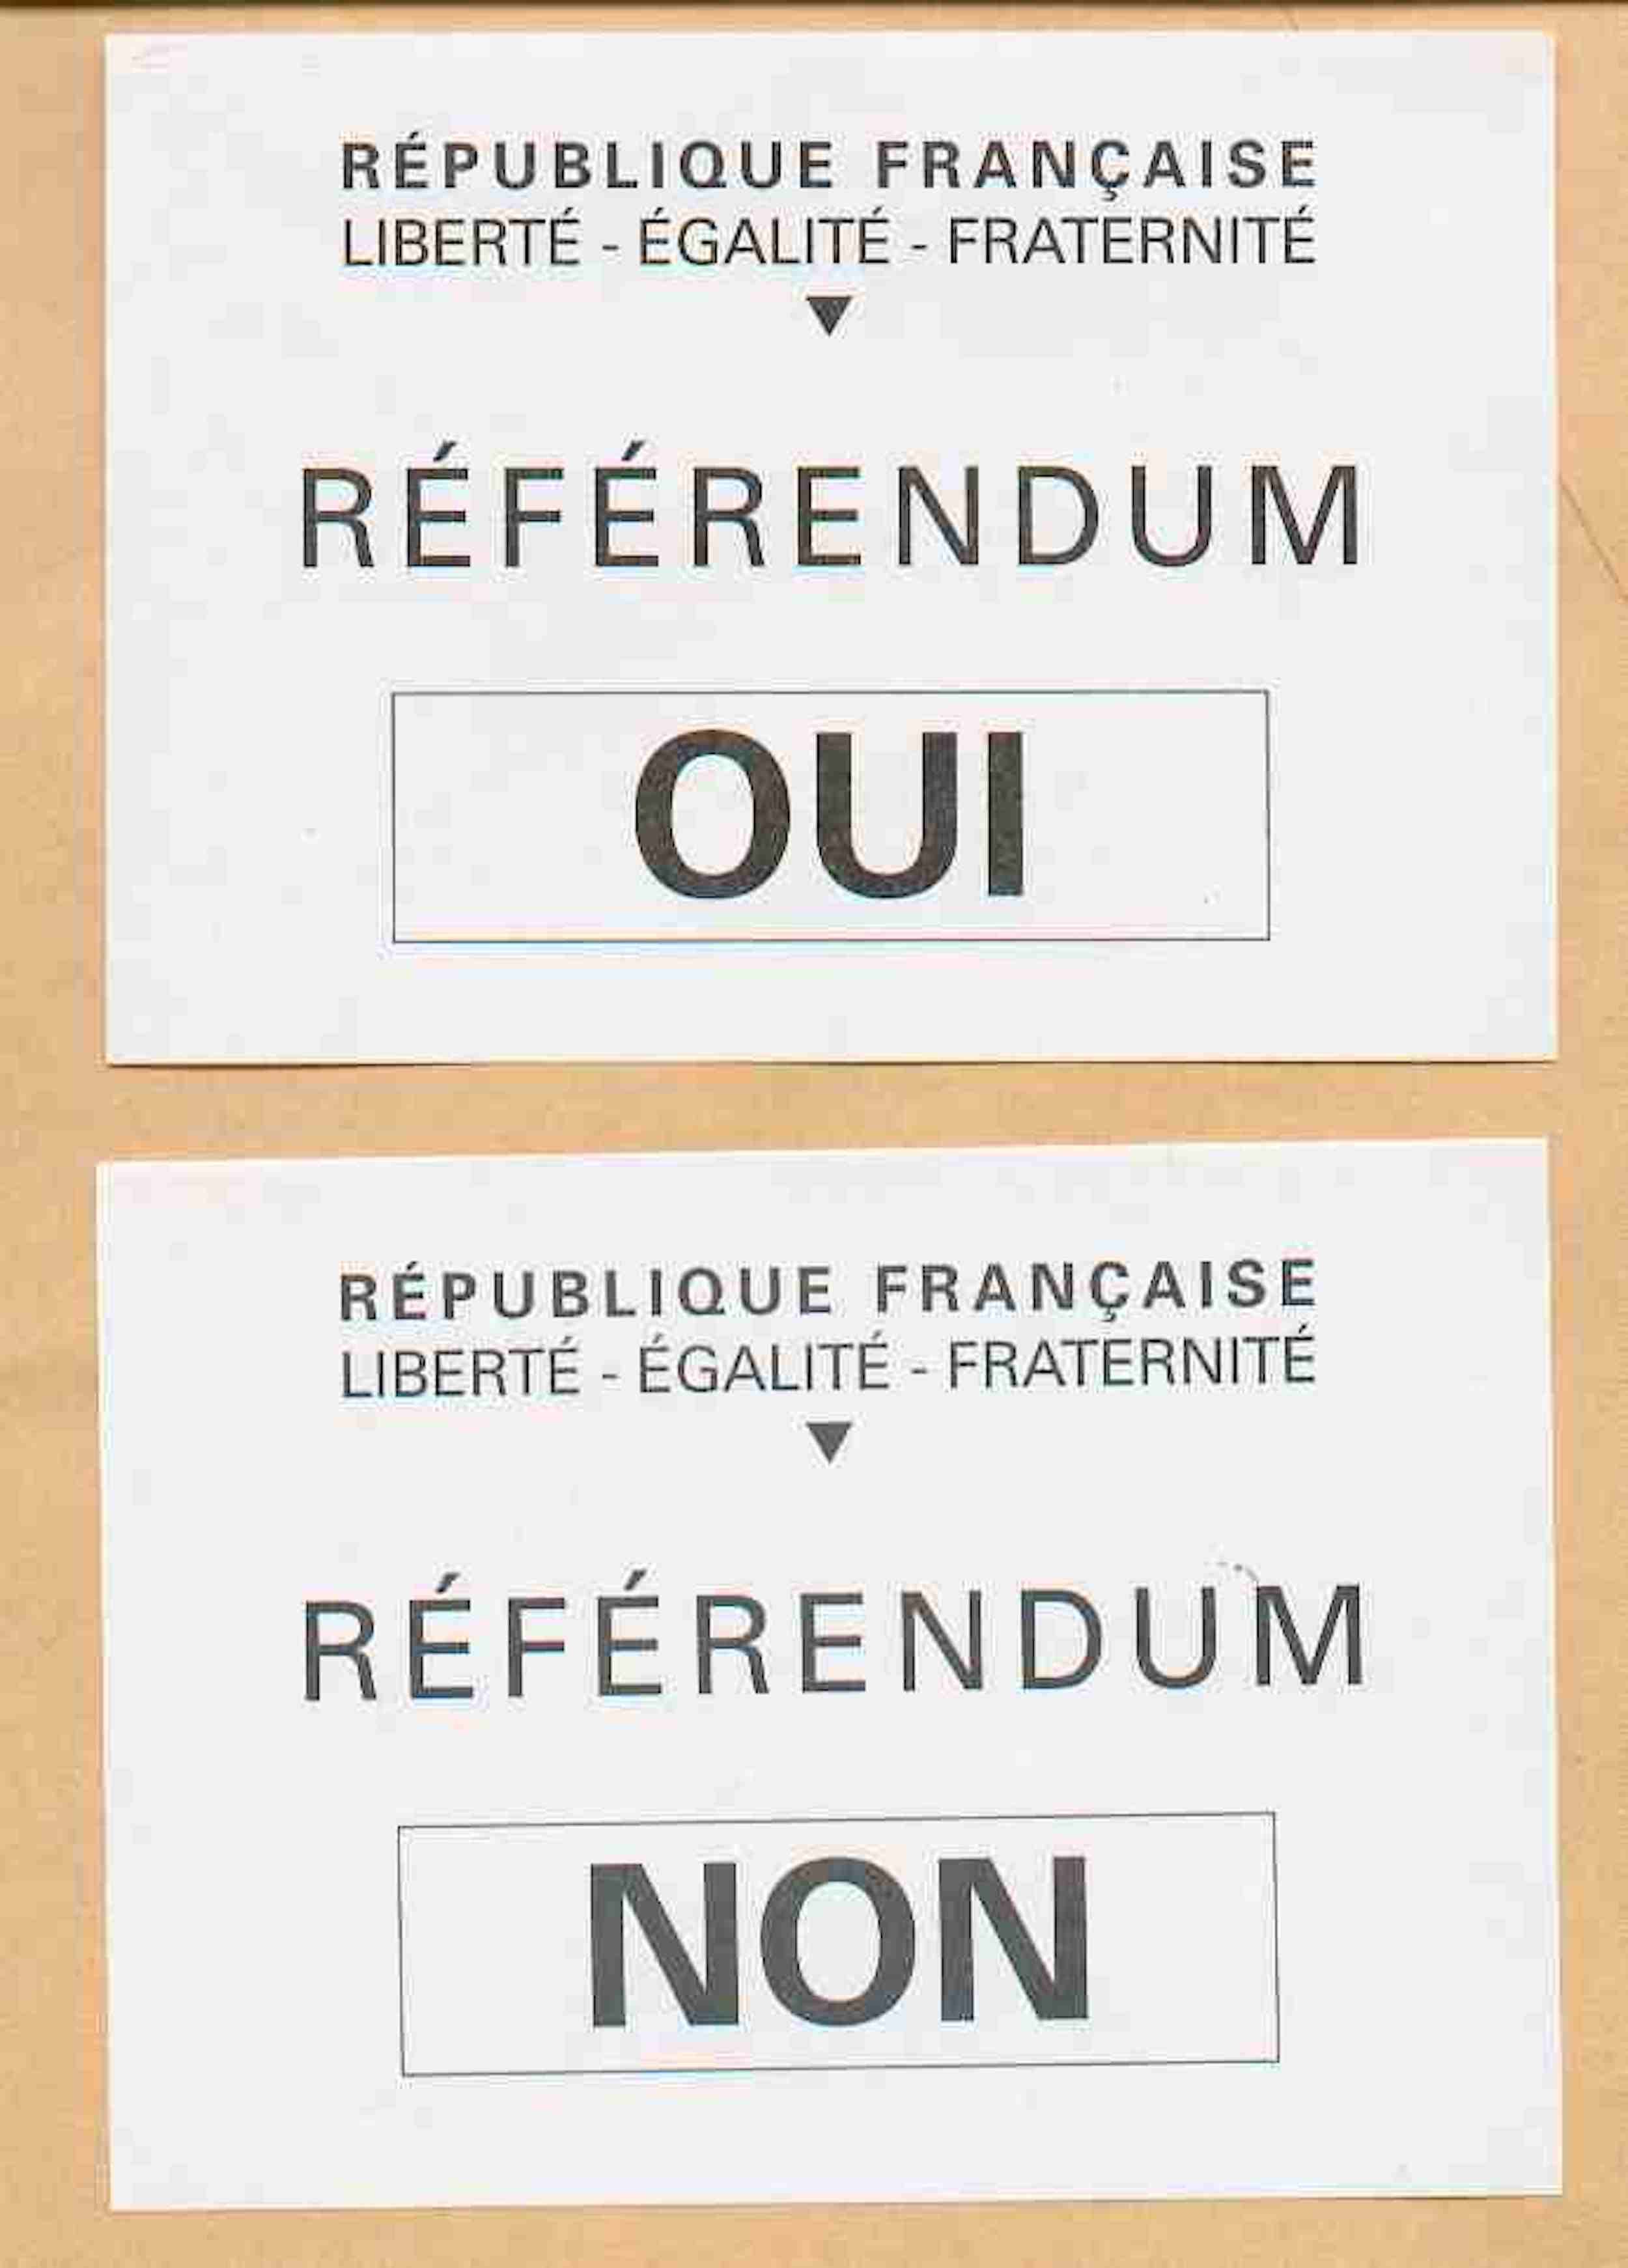 Referendum ballots